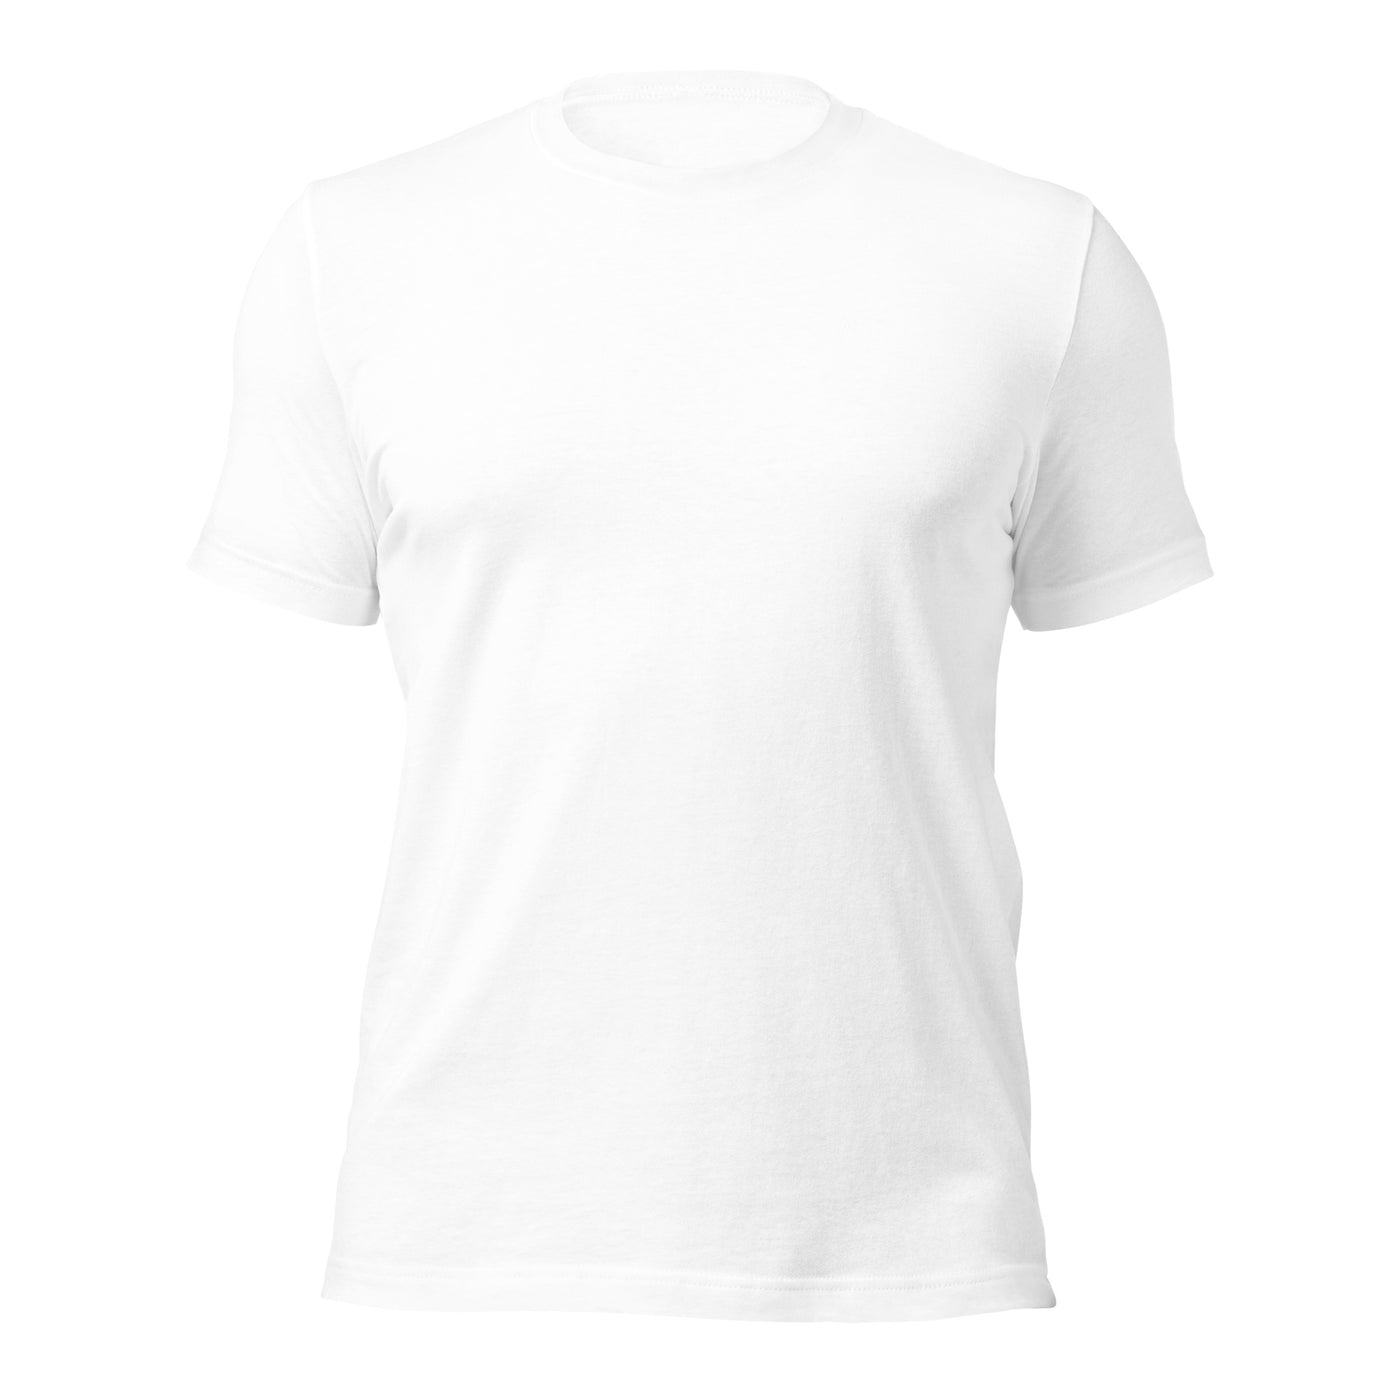 Full Moon Astronaut - Unisex t-shirt ( Back Print )